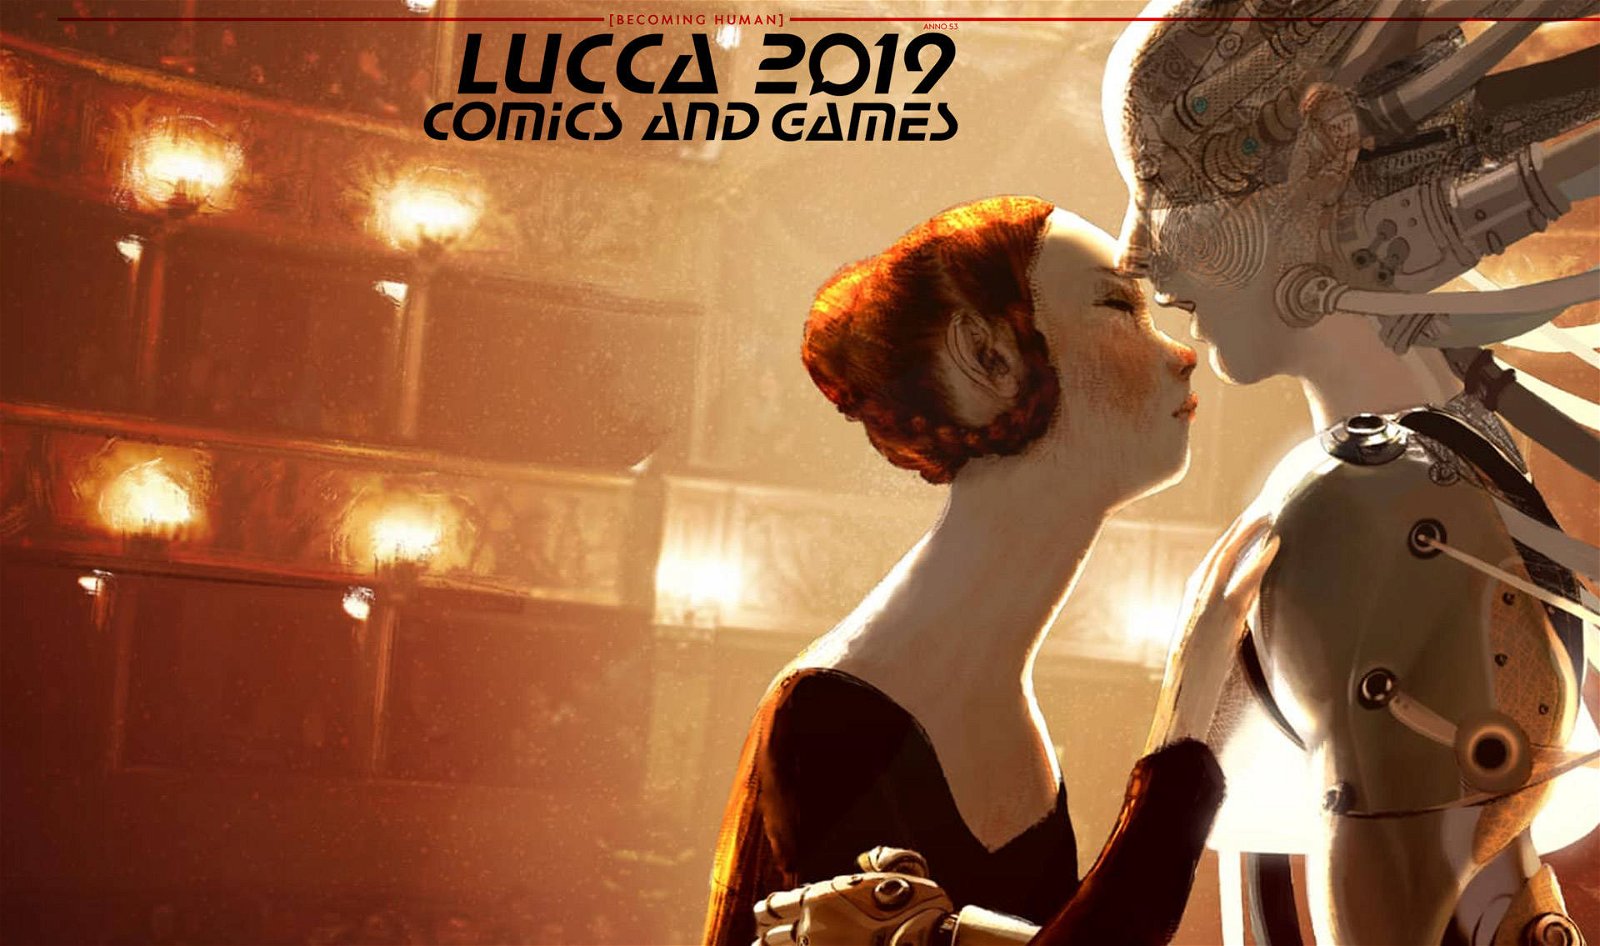 Immagine di Lucca Comics &amp; Games 2019, gli eventi di mercoledì 30 ottobre da non perdere!